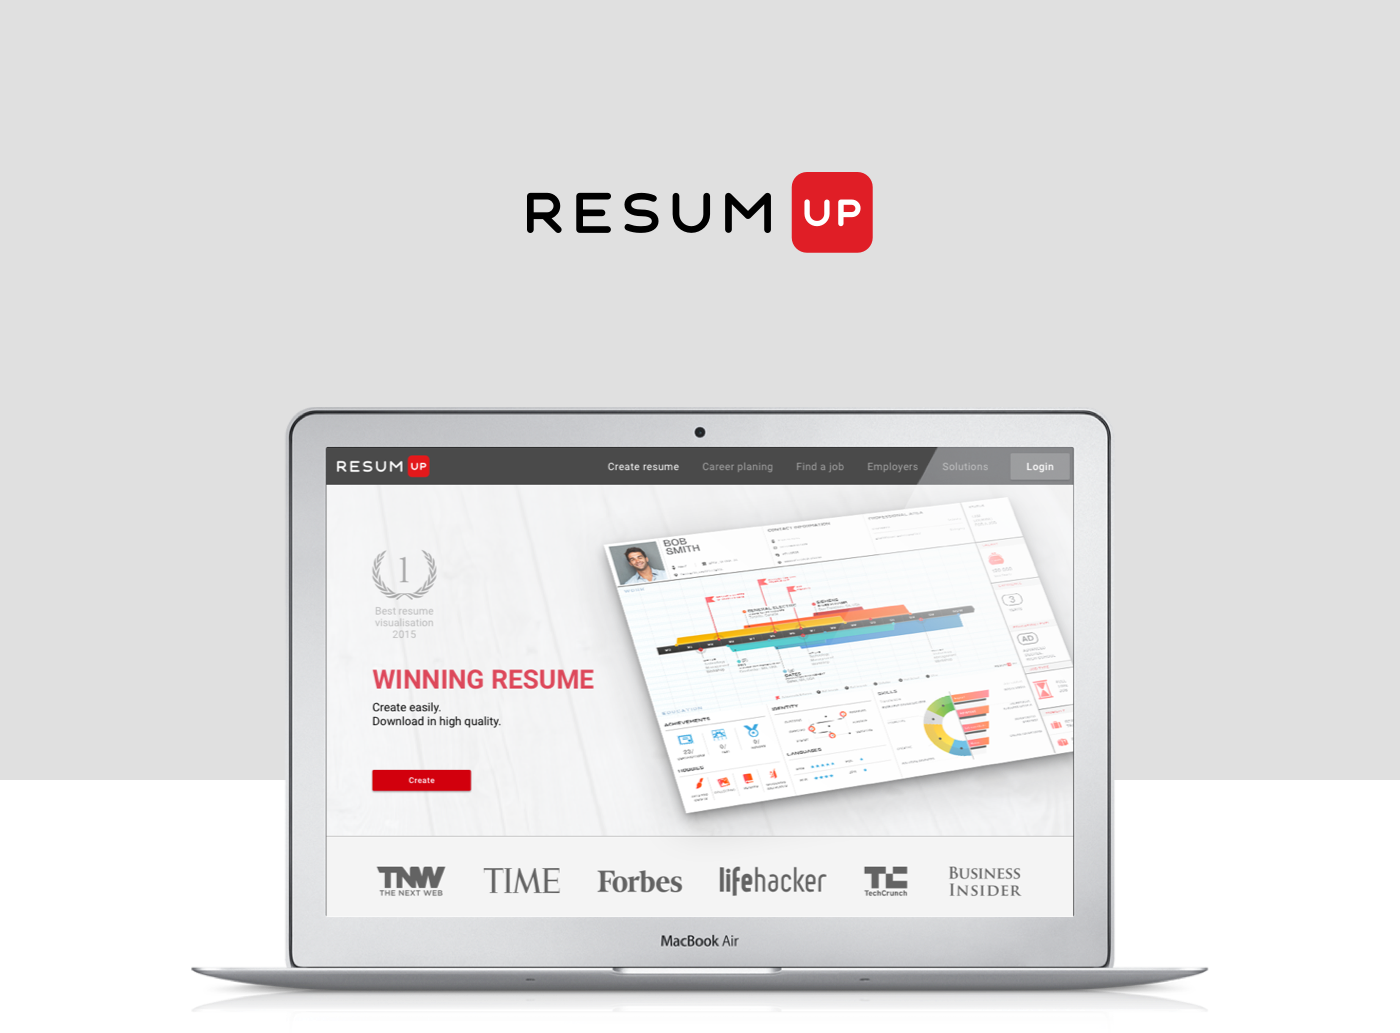 Resume Startup service